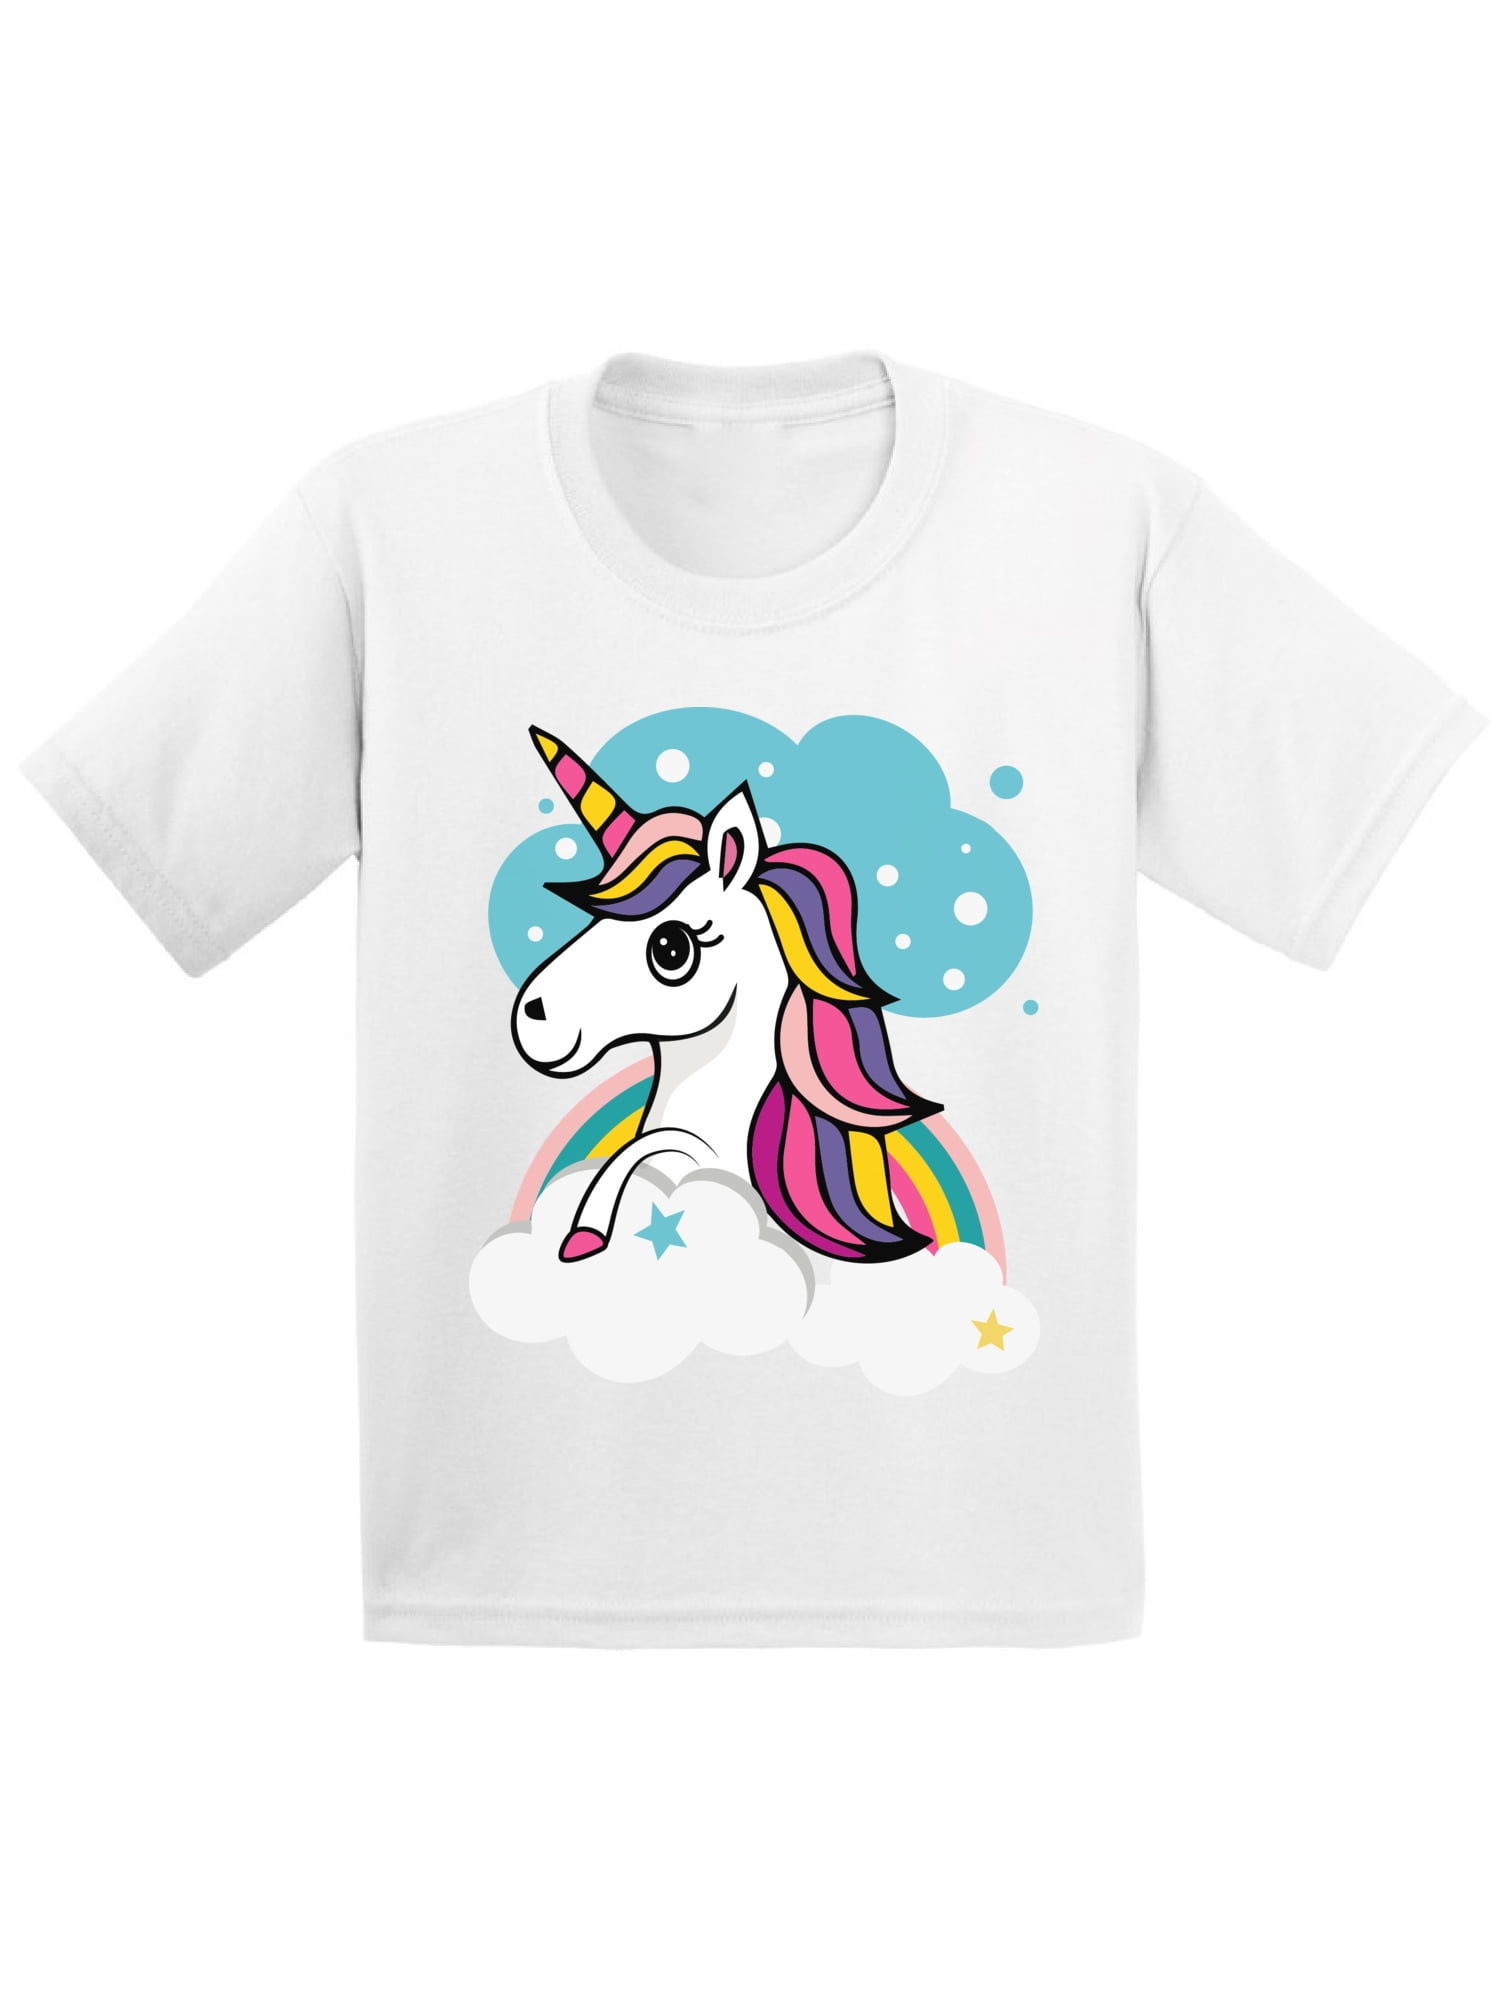 Awkward Styles Cute Unicorn Shirt for Youth Kids Boys Unicorn Gifts for ...